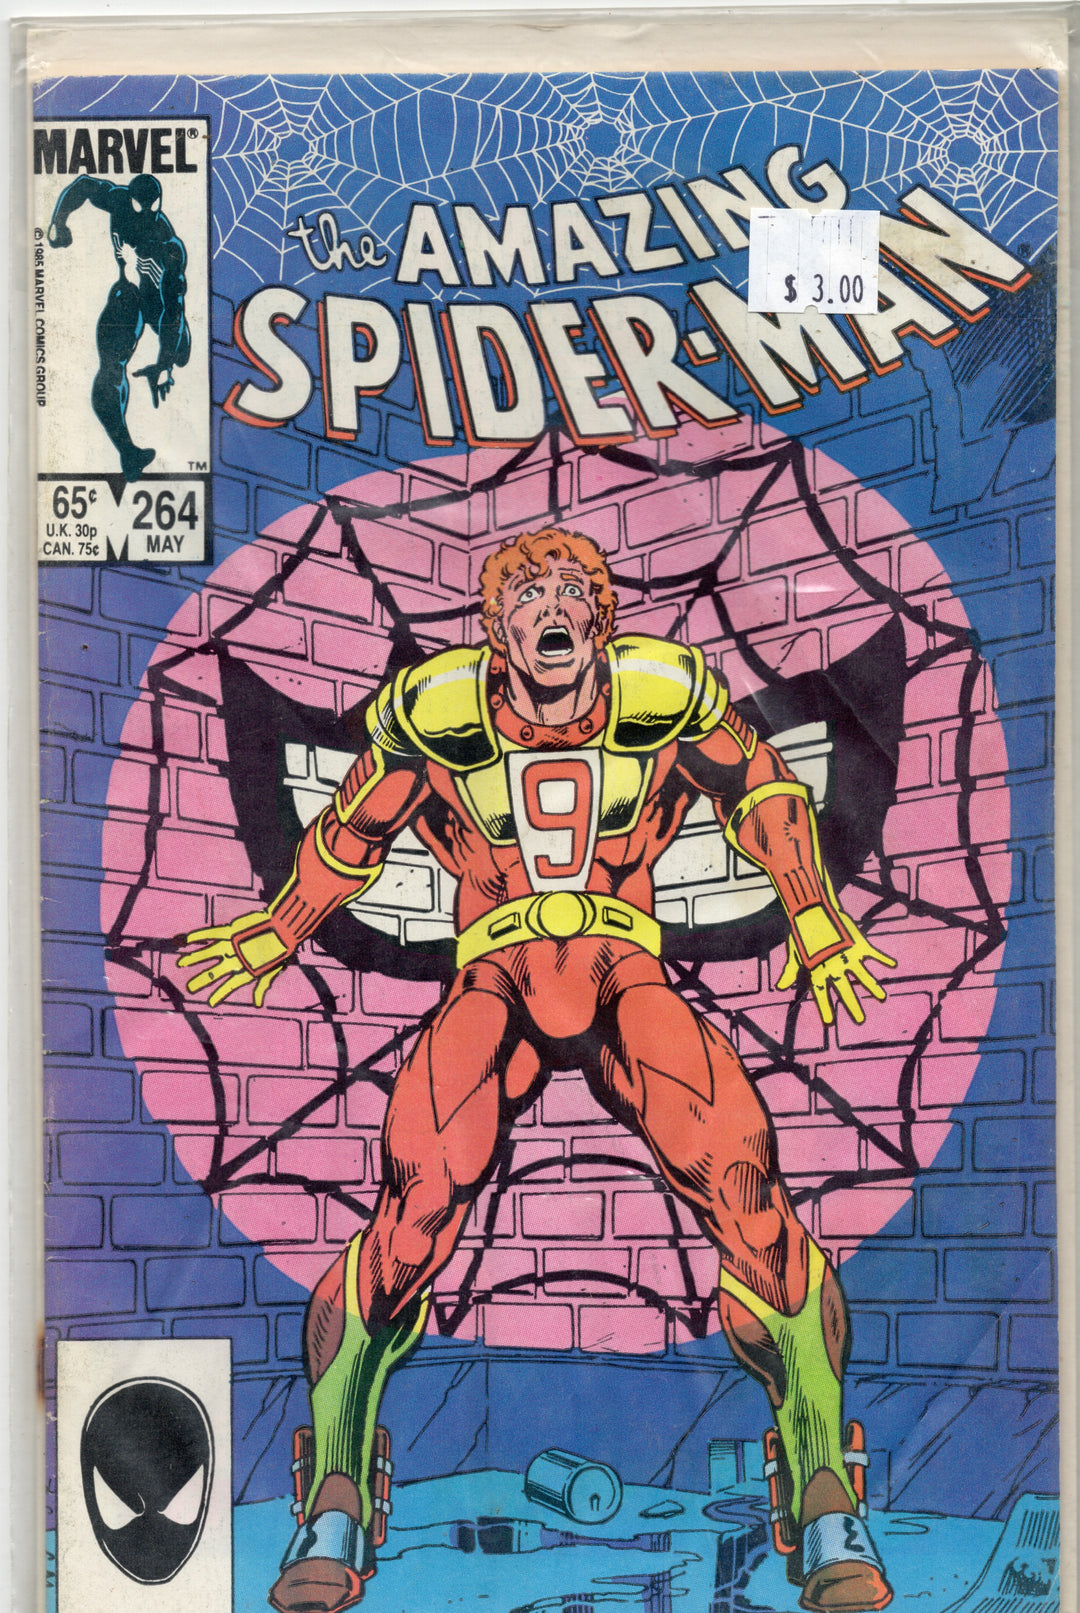 The Amazing Spider Man #264